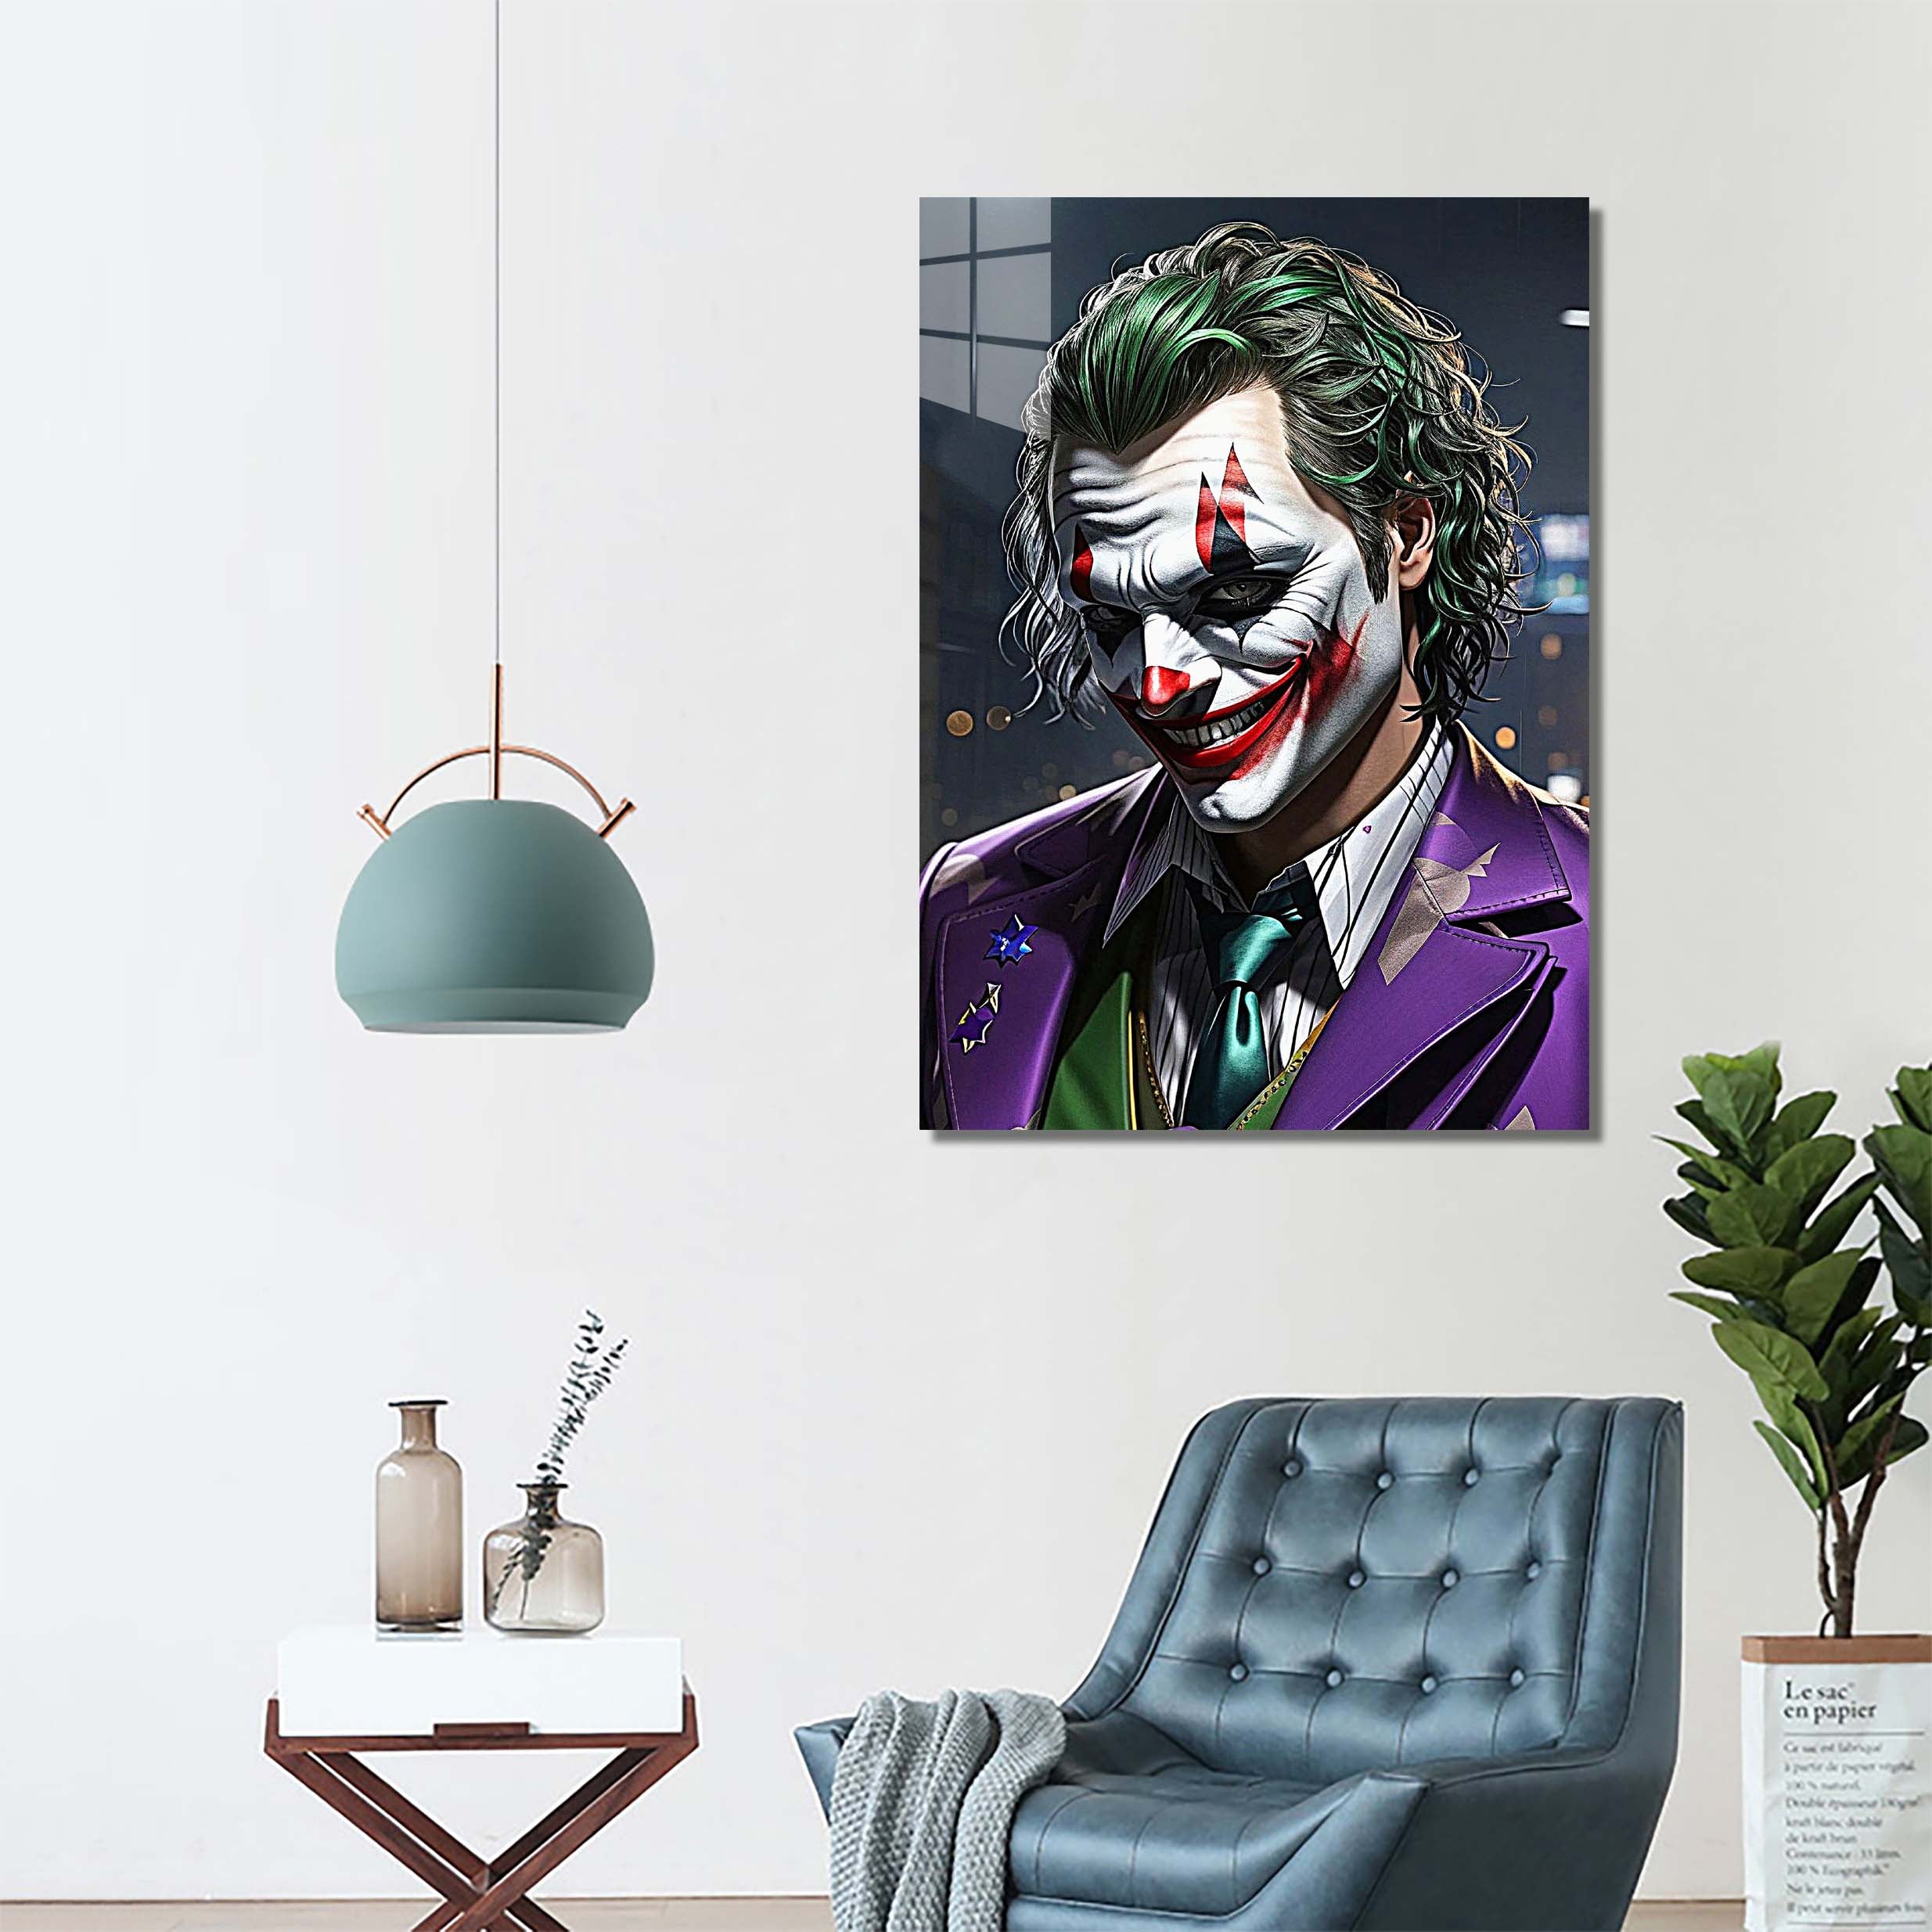 Joker arthur fleck-designed by @Hamka Risha